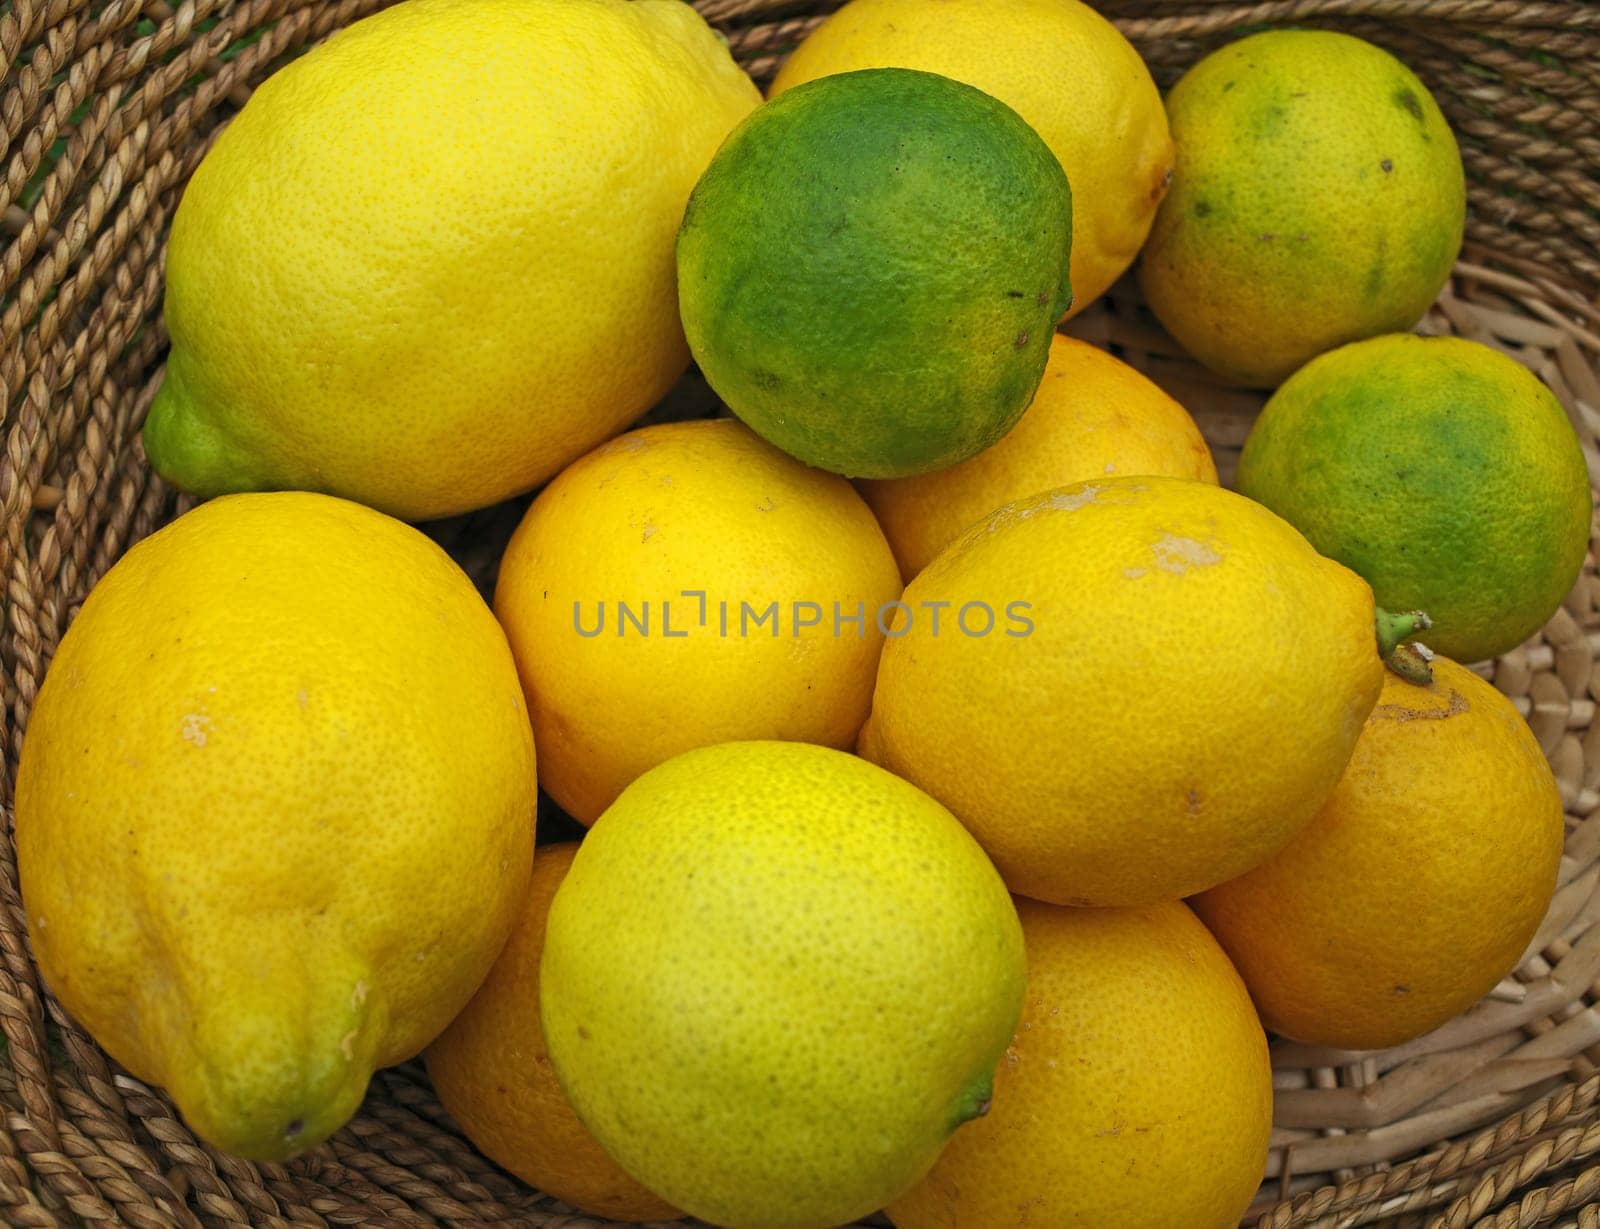 Lemons in limes in various sizes in a wicker basket